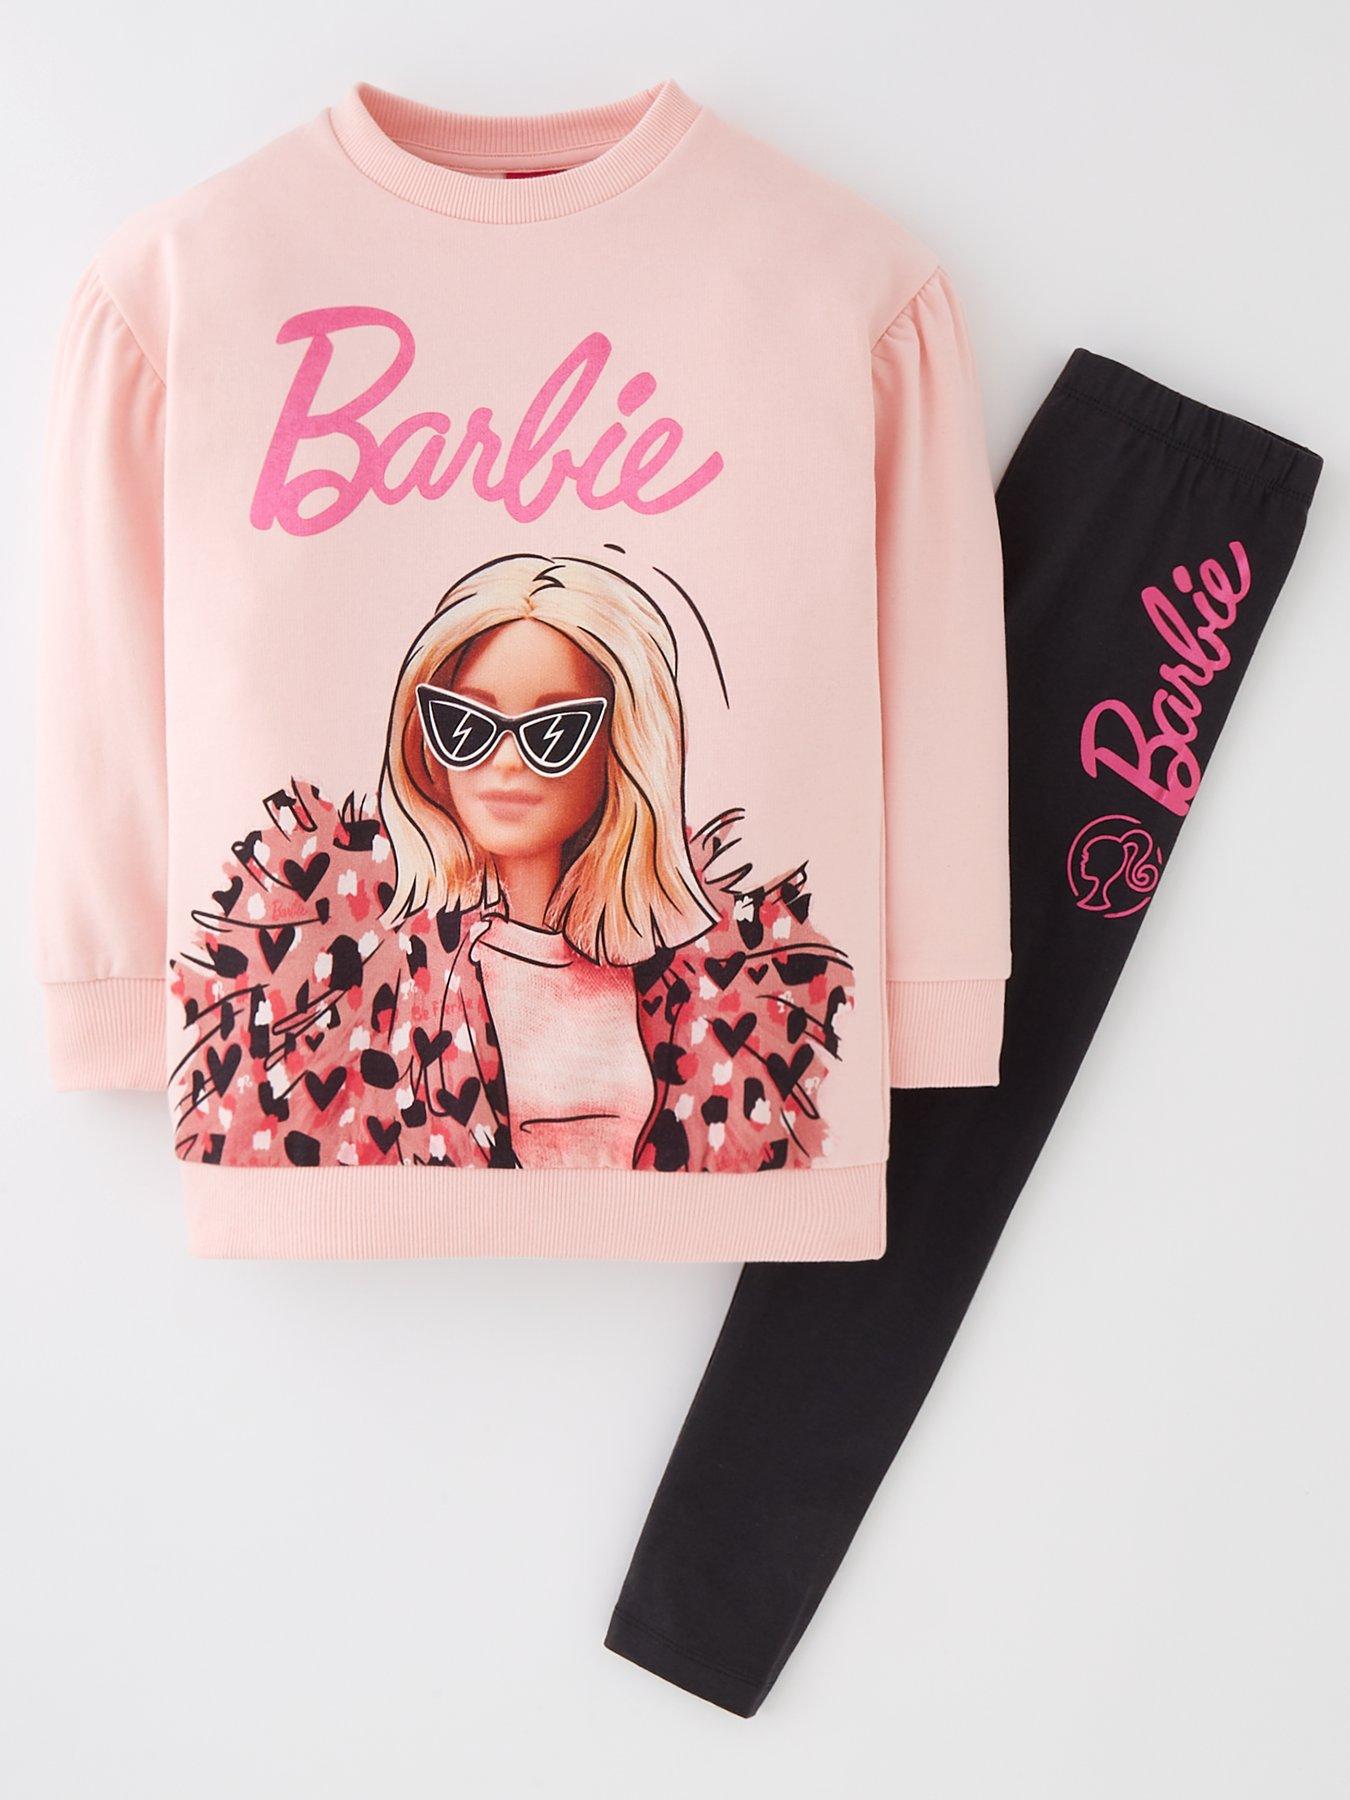 Love Moschino Barbie pink T-shirt dress metallic glitter heart graphic size  2